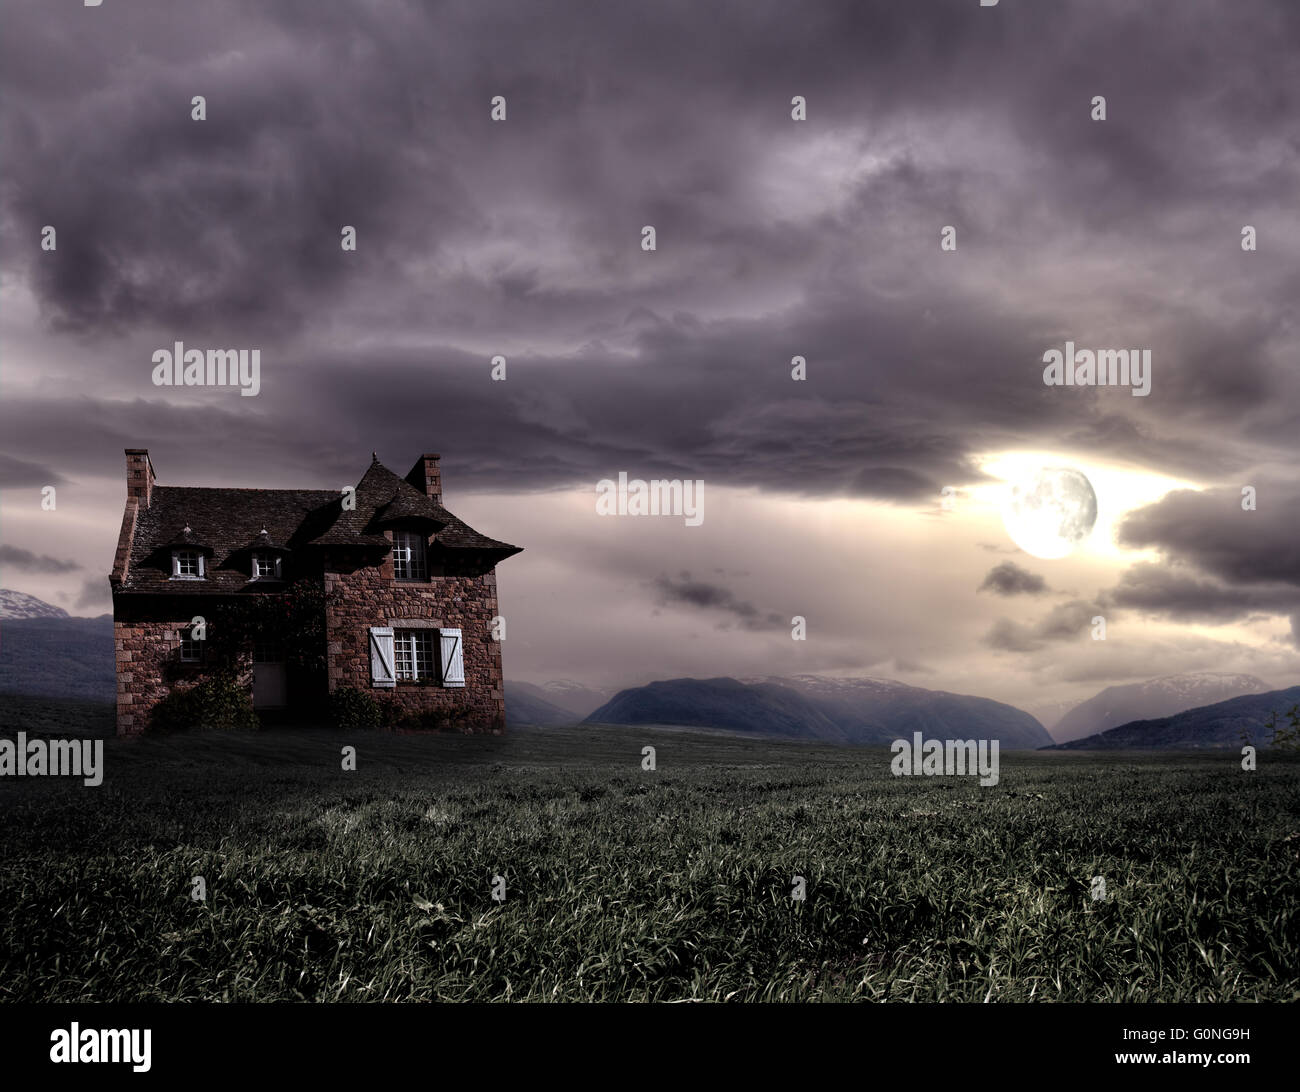 Apokalyptische Halloween-Landschaft mit alten Haus Stockfoto